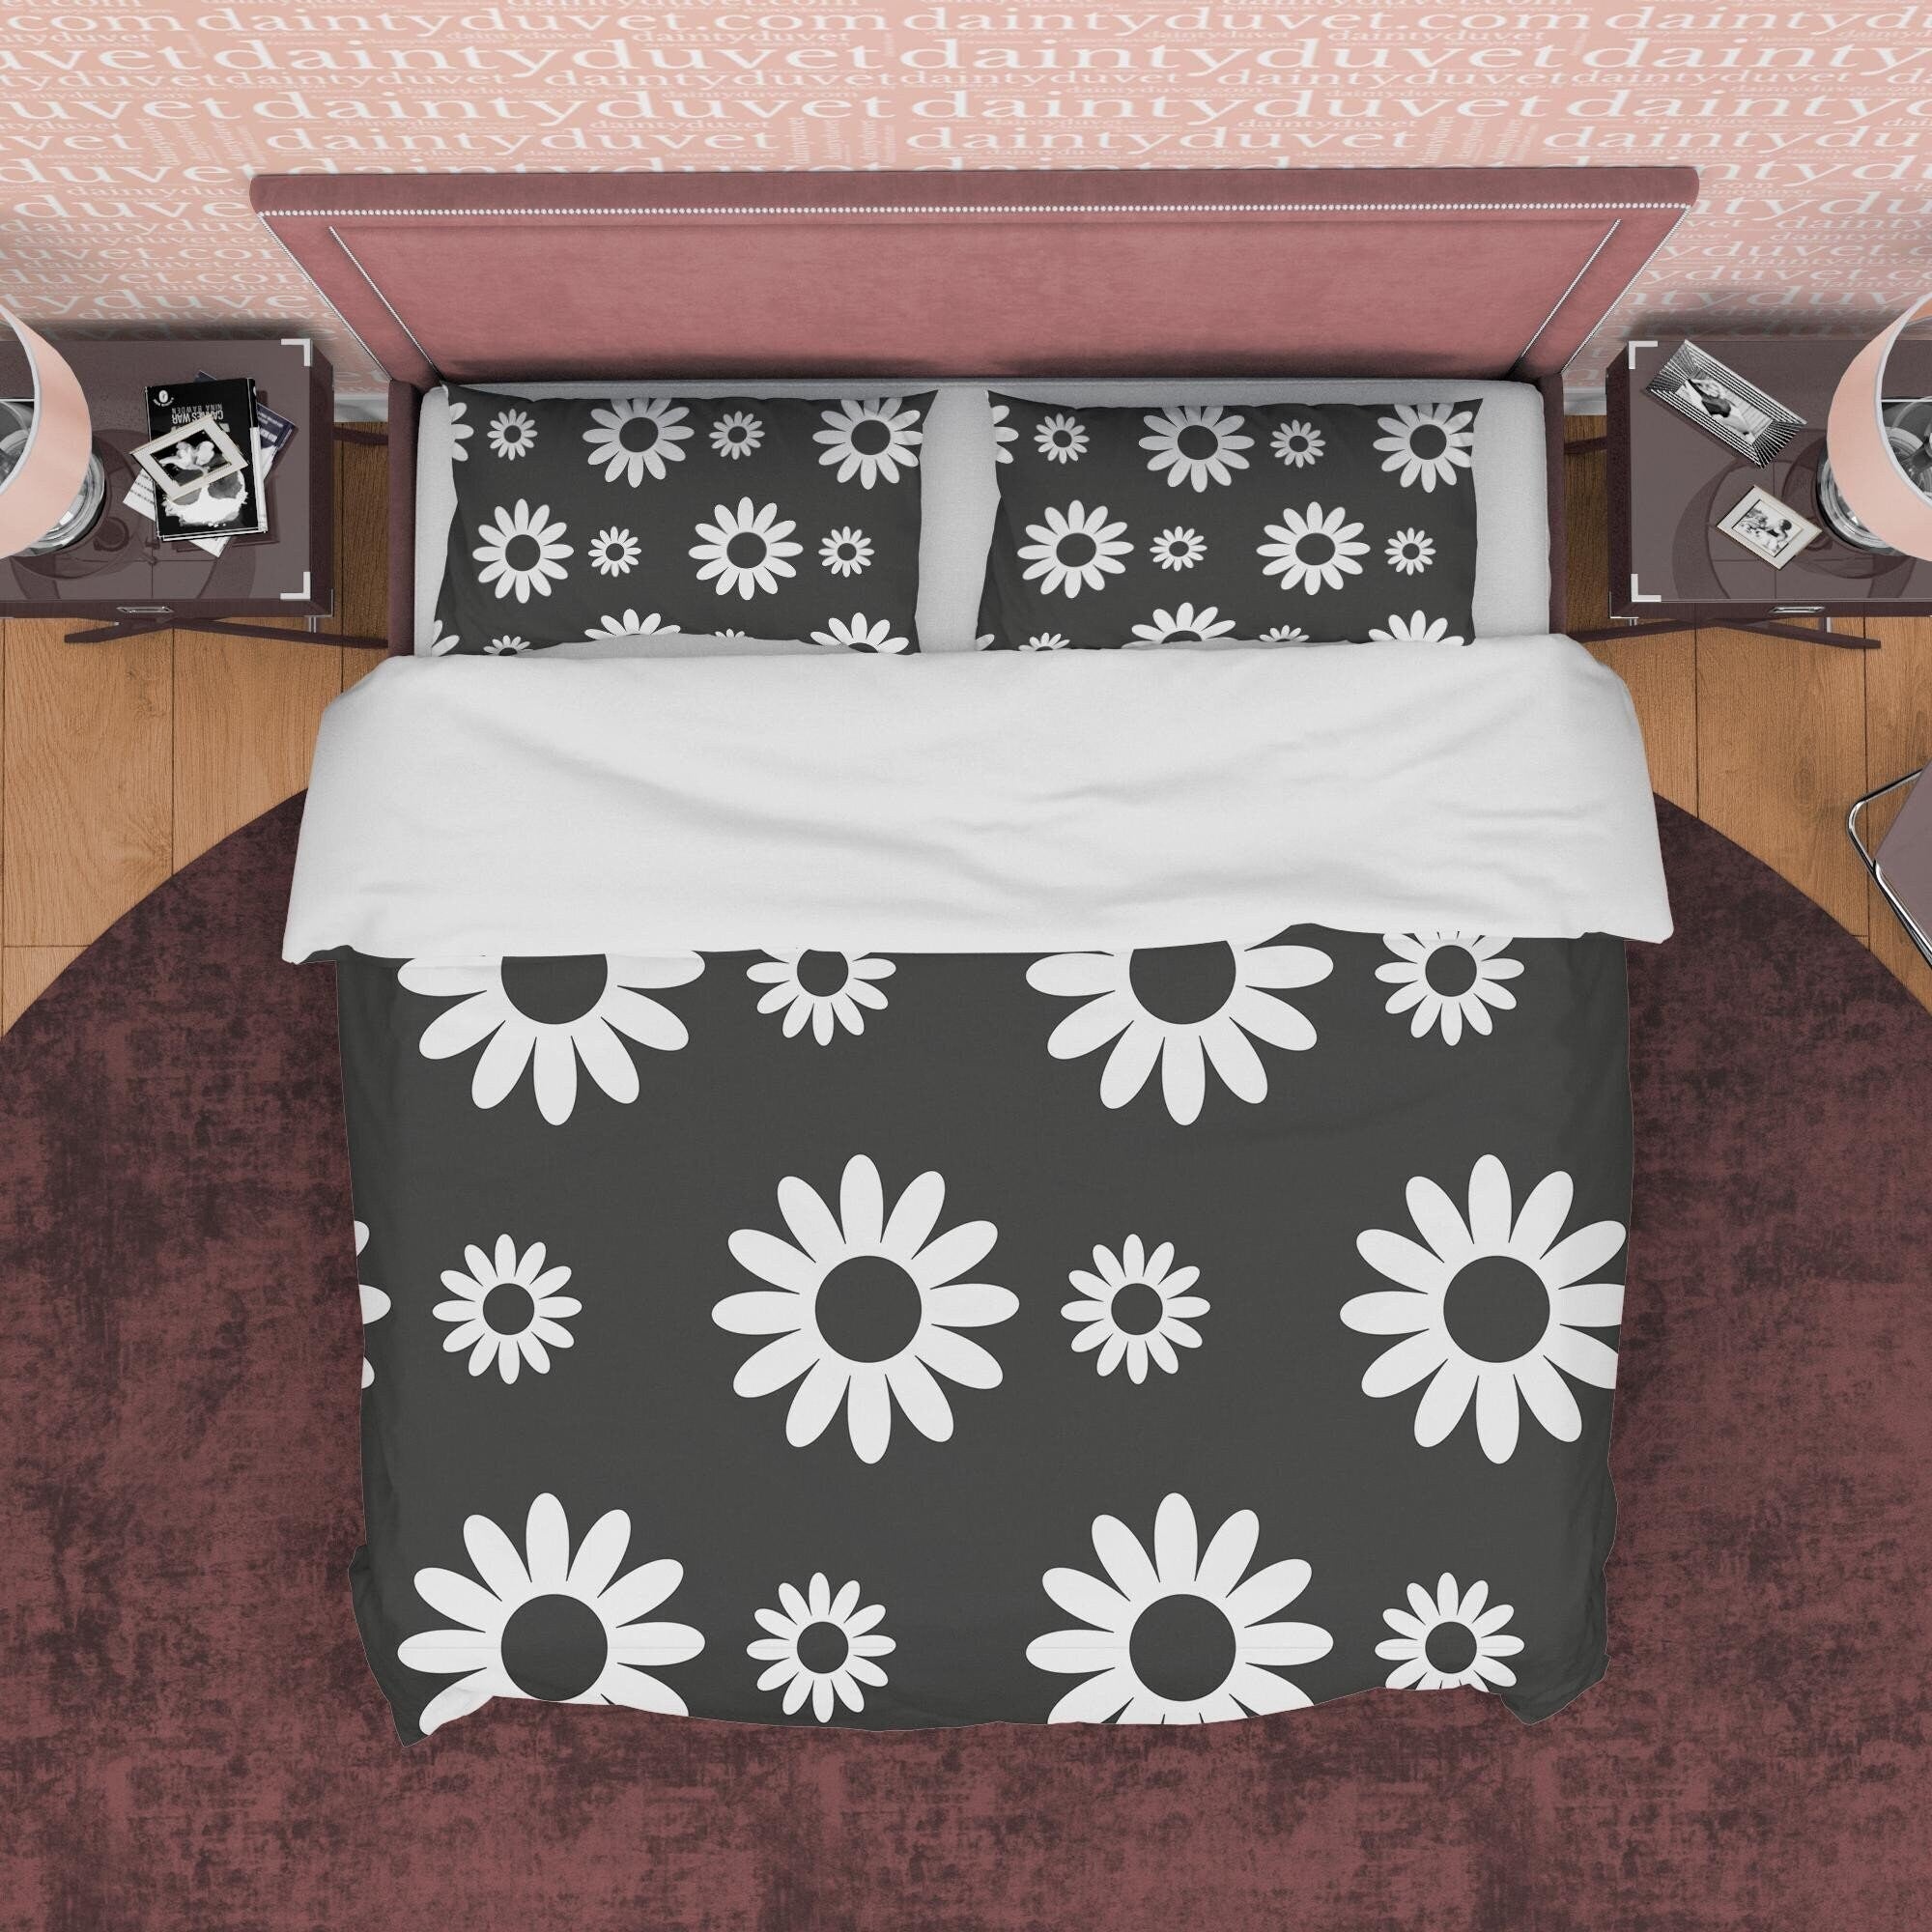 Flower Black and White Duvet Cover Set, Simple Floral Blanket Cover Retro Printed Bedding Set, 90s Nostalgia Quilt Cover, Groovy Bedspread